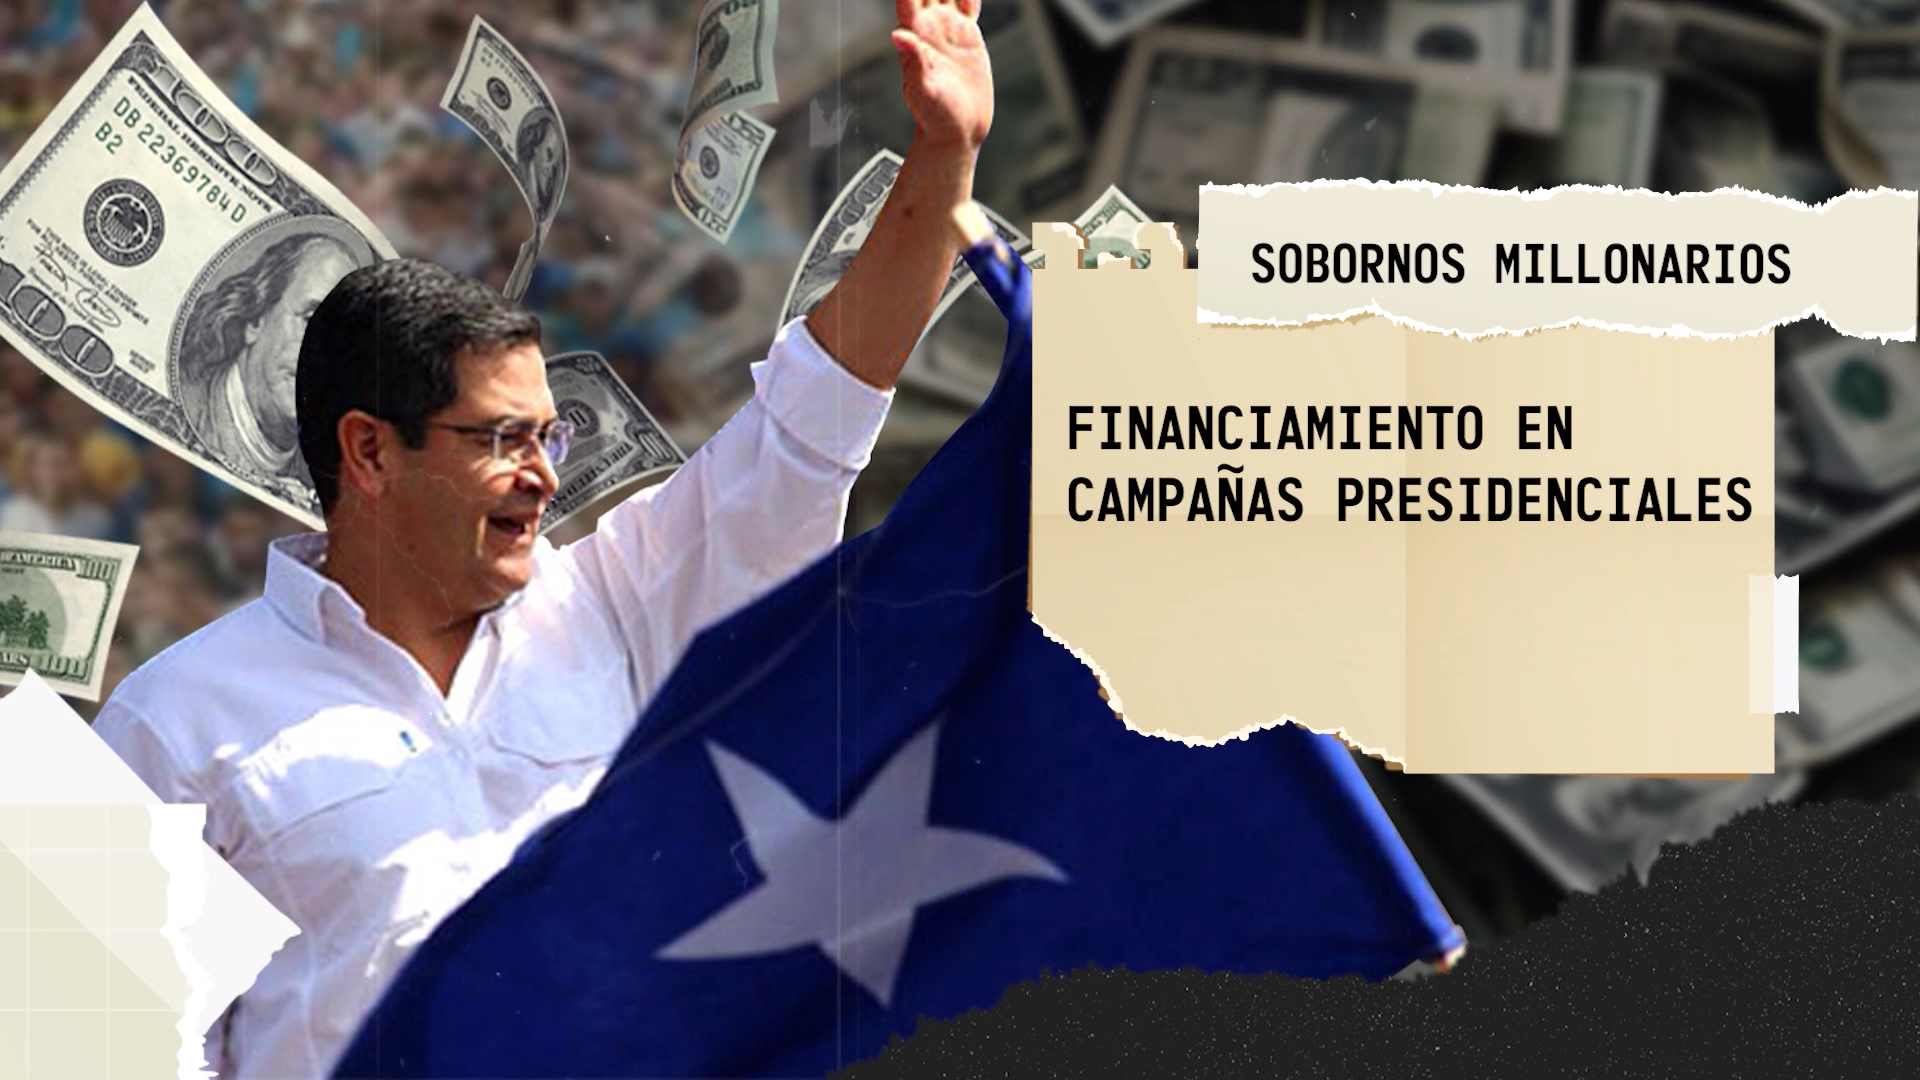 raficantes de droga confiesan que entregaron al menos $11 millones a partidos políticos de Honduras